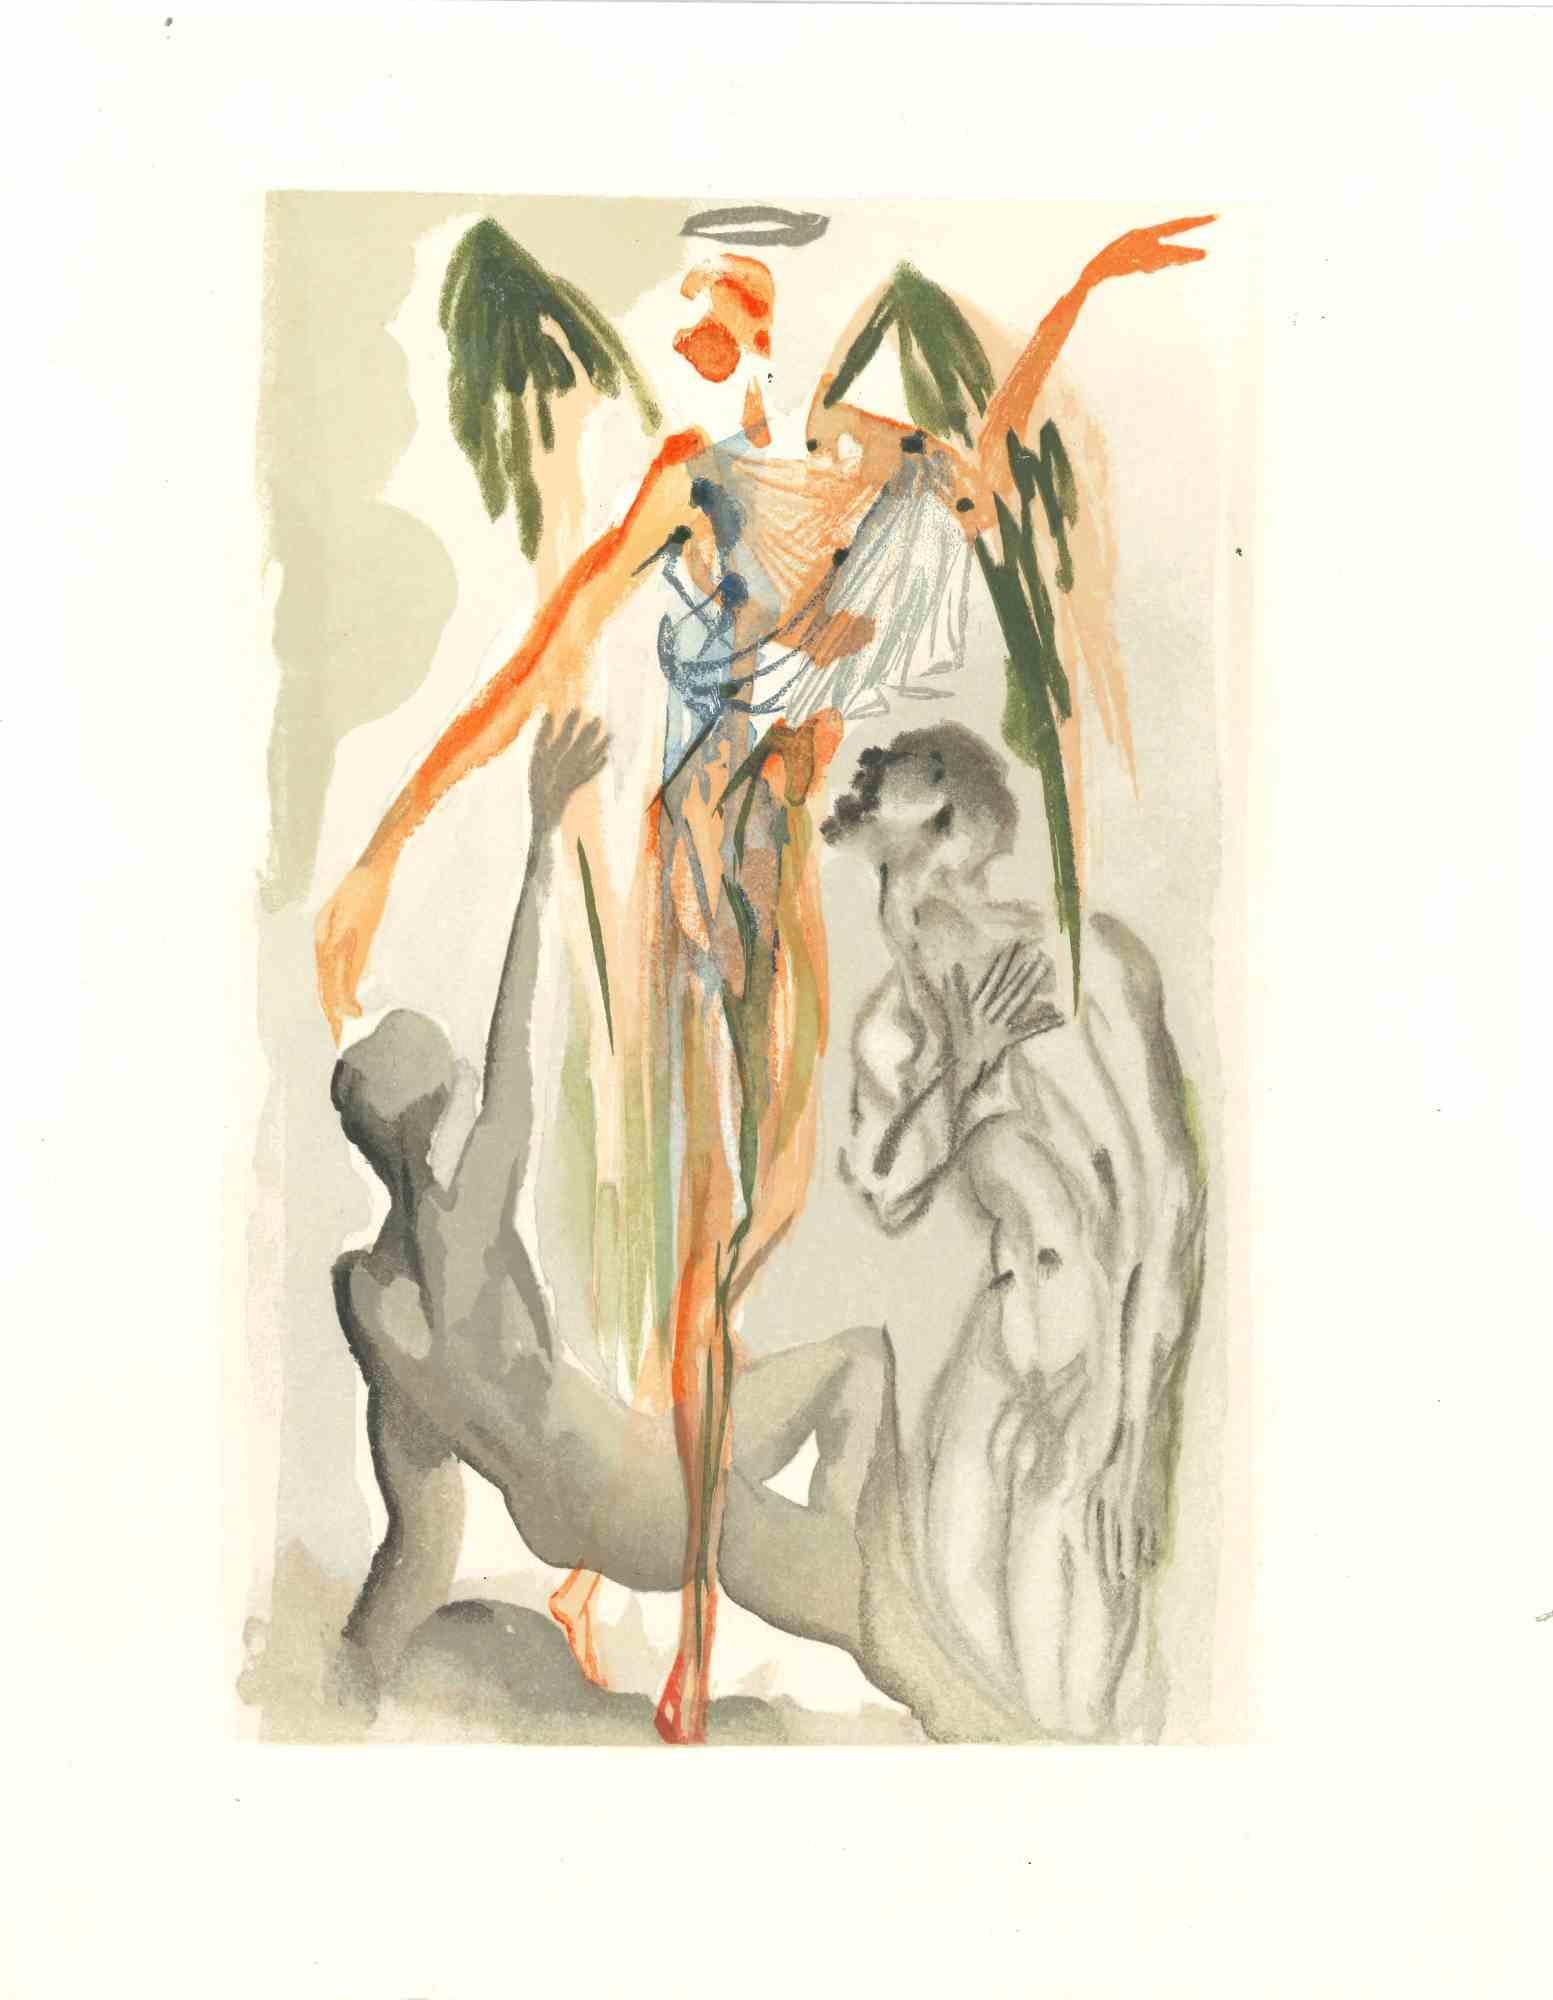 Towards of Tree of Law- Original Woodcut Print - 1963